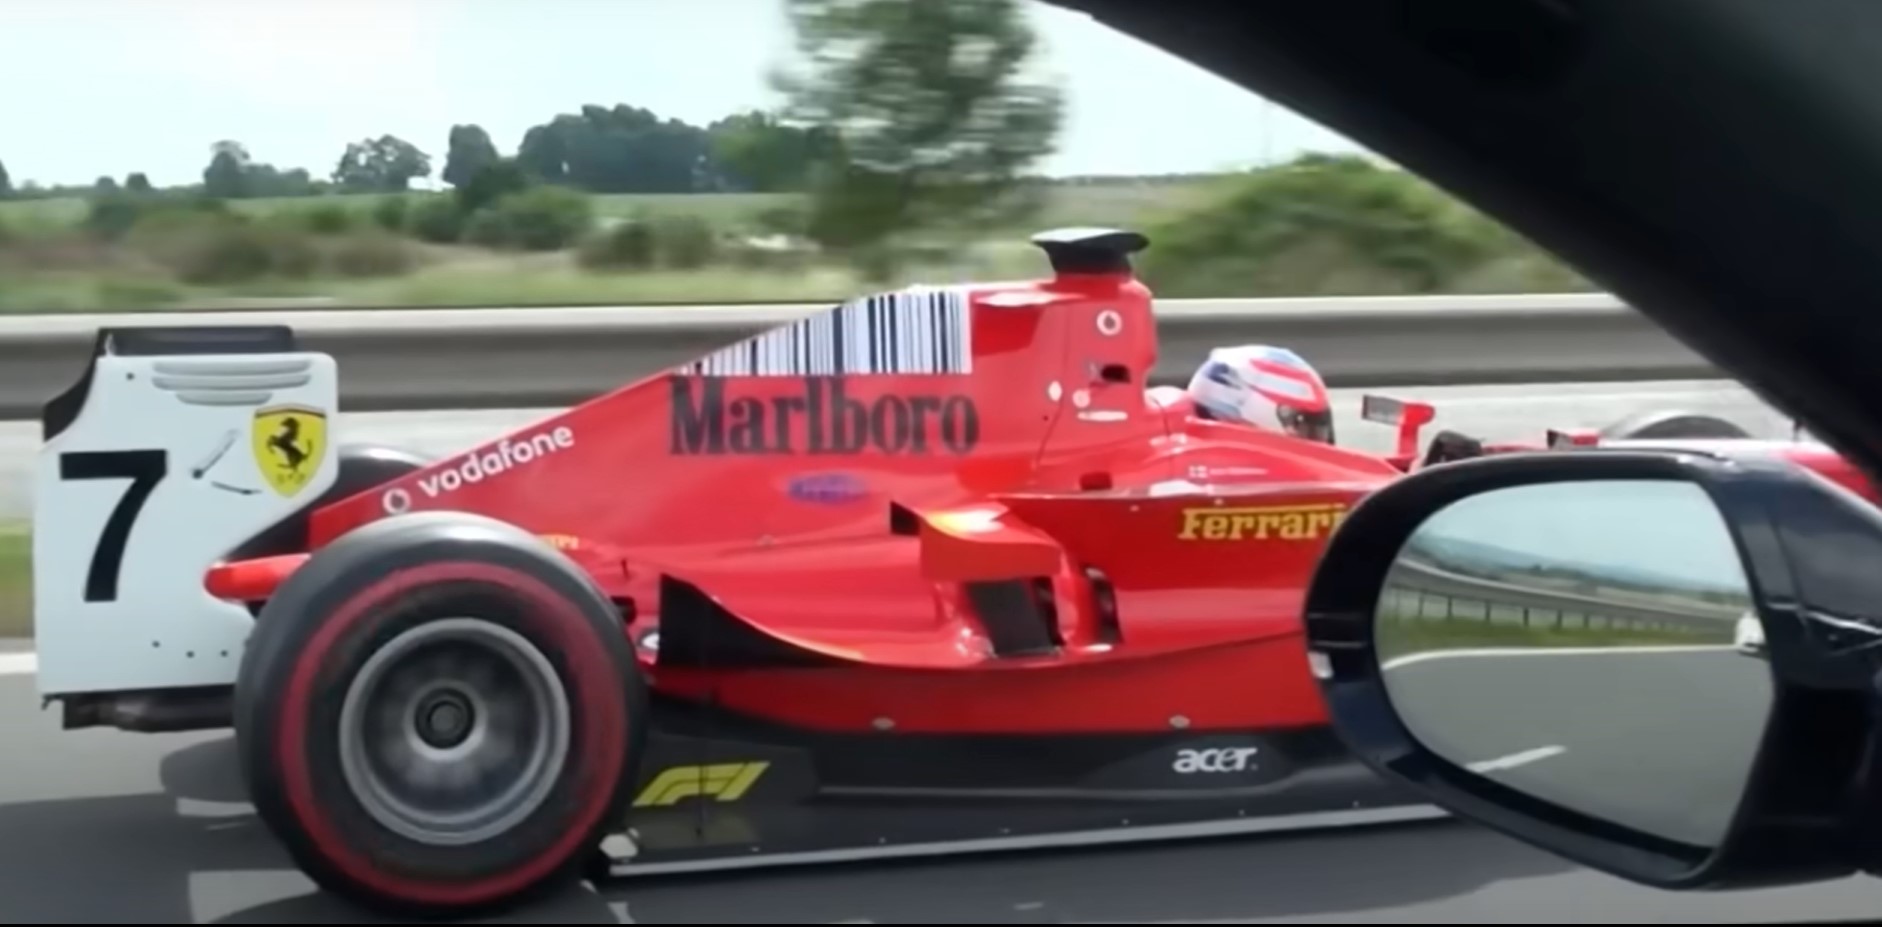 Revhead stuns Czech police by taking Ferrari Grand Prix car on Highway